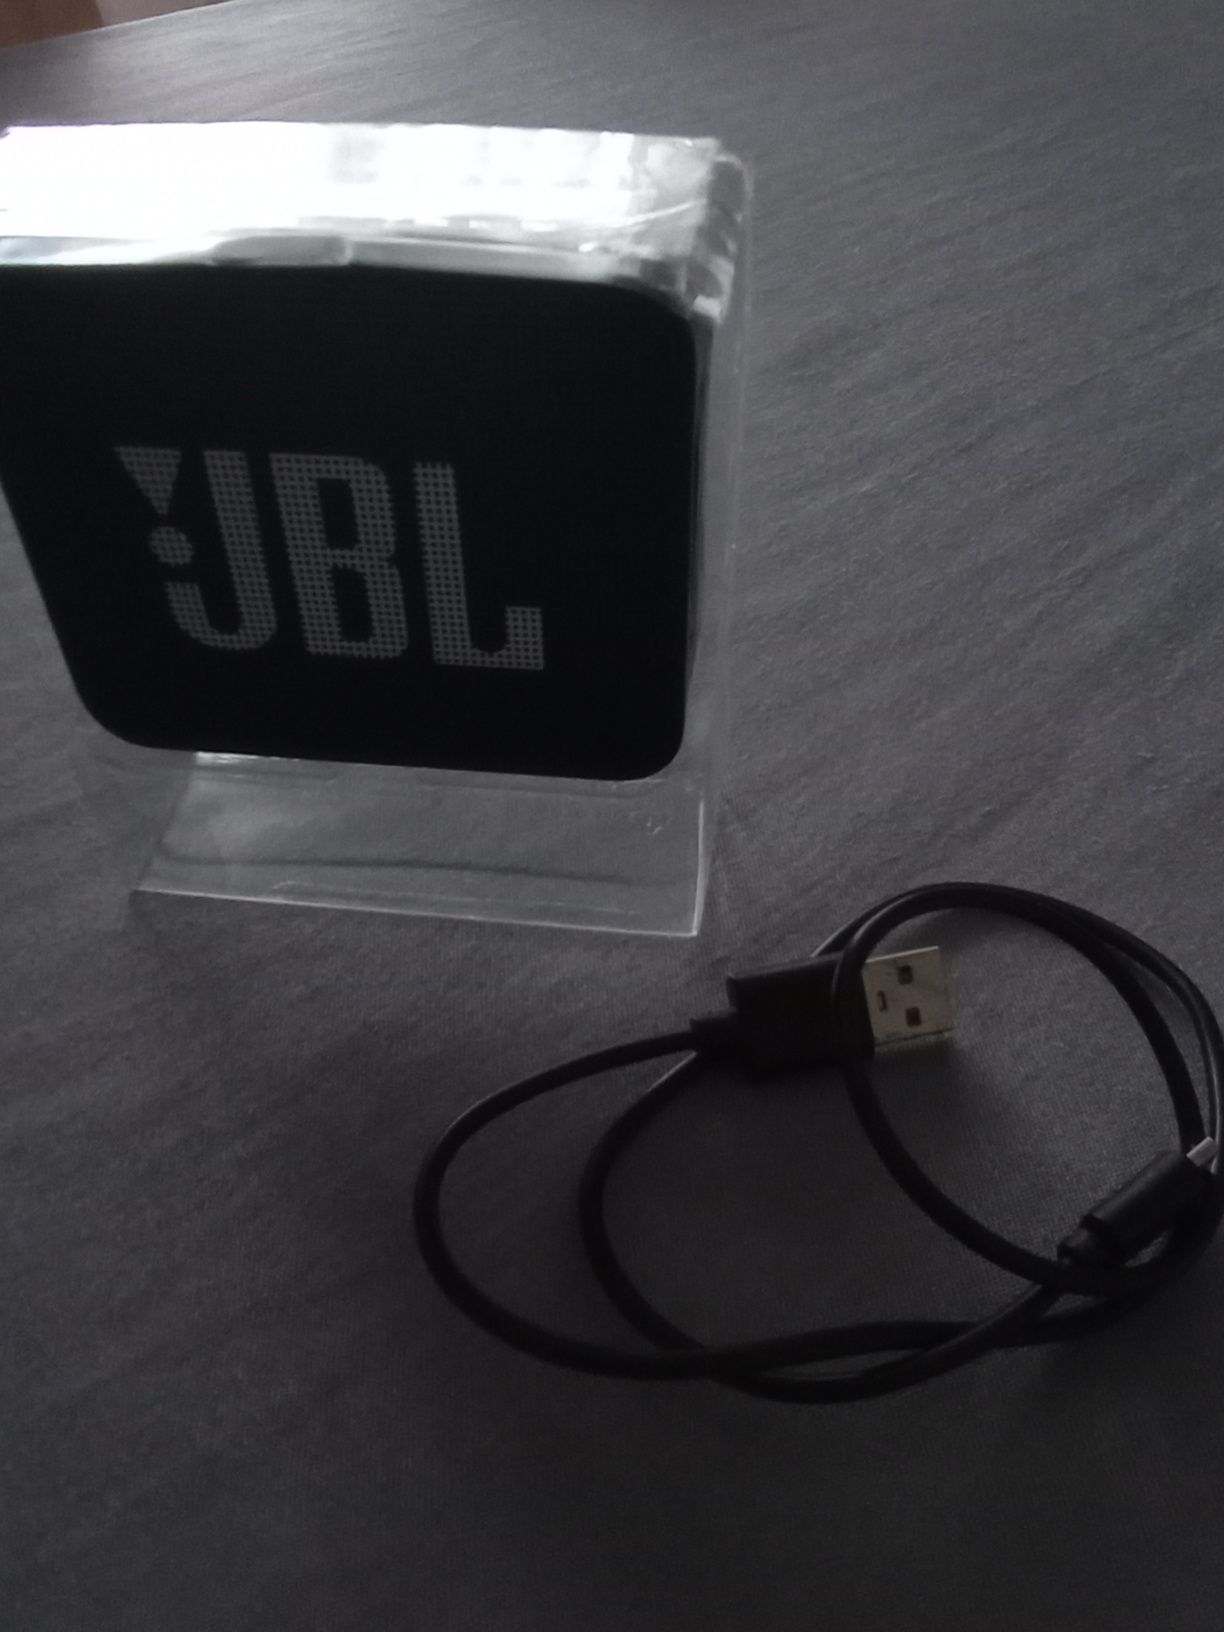 Głośnik JBL GO 2